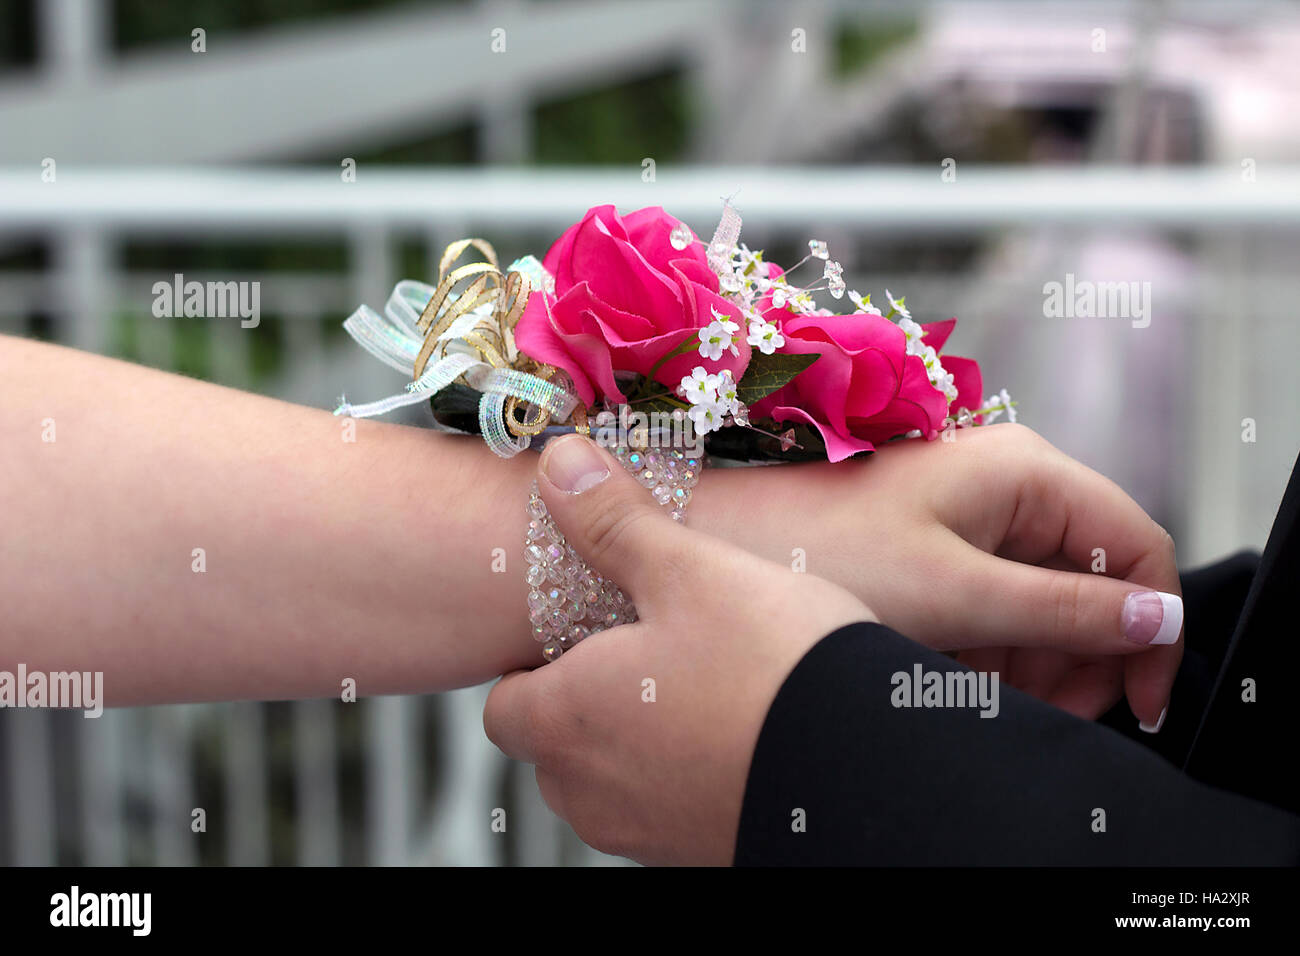 Man putting corsage on woman's wrist Stock Photo